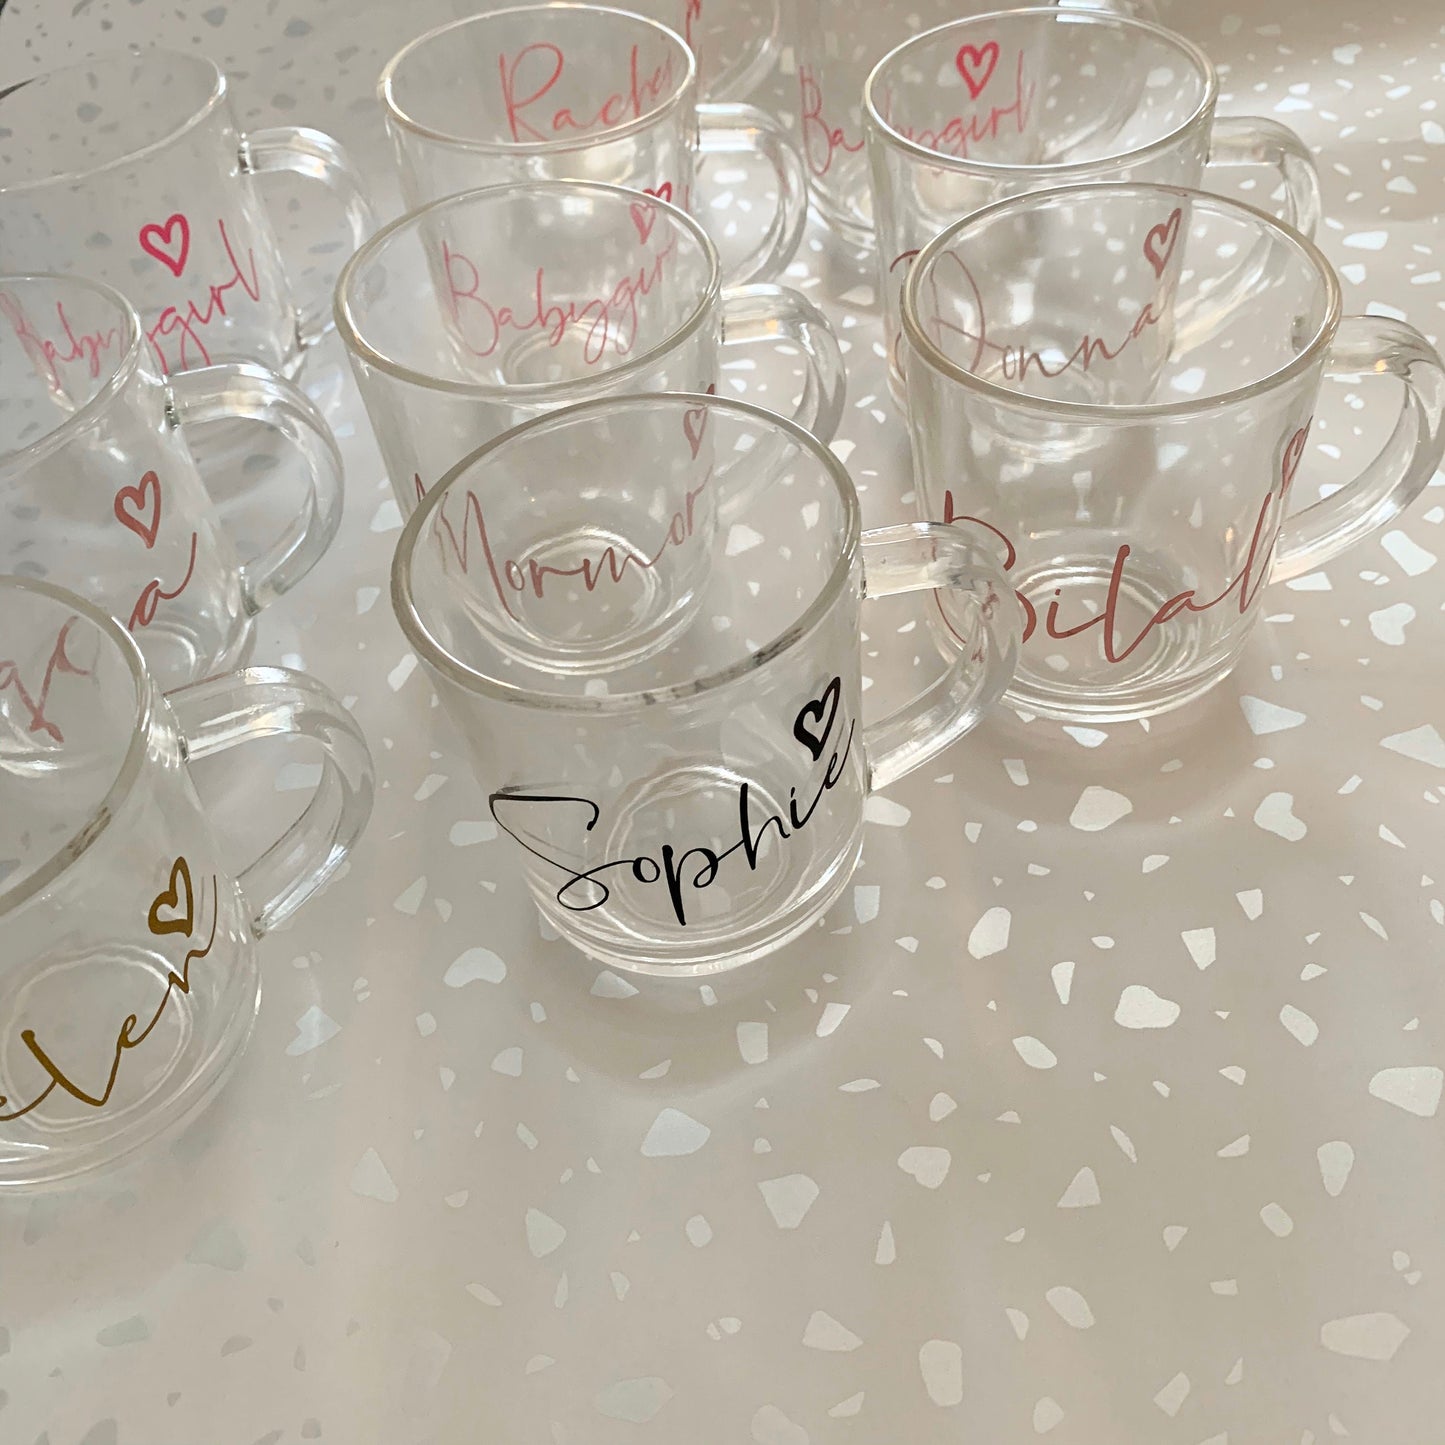 Personalised glass mug, glass cup, bridesmaid gift, new home gift, personalised coffe mug, personalised tea cup, bridesmaid proposal, glass